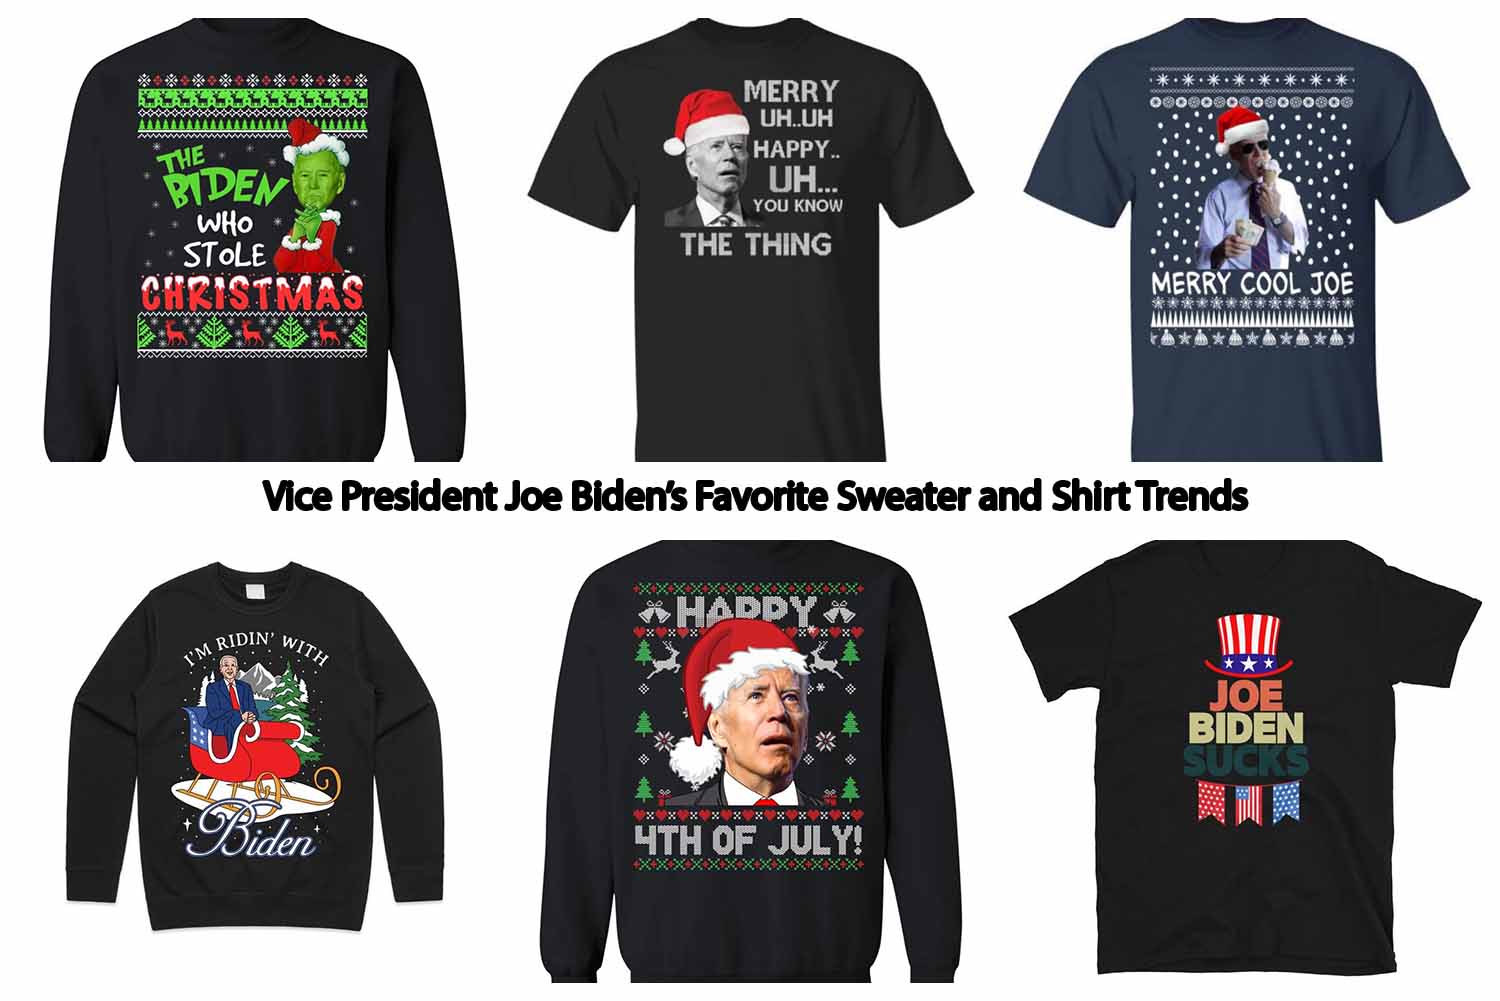 Vice President Joe Biden’s Favorite Sweater and Shirt Trends